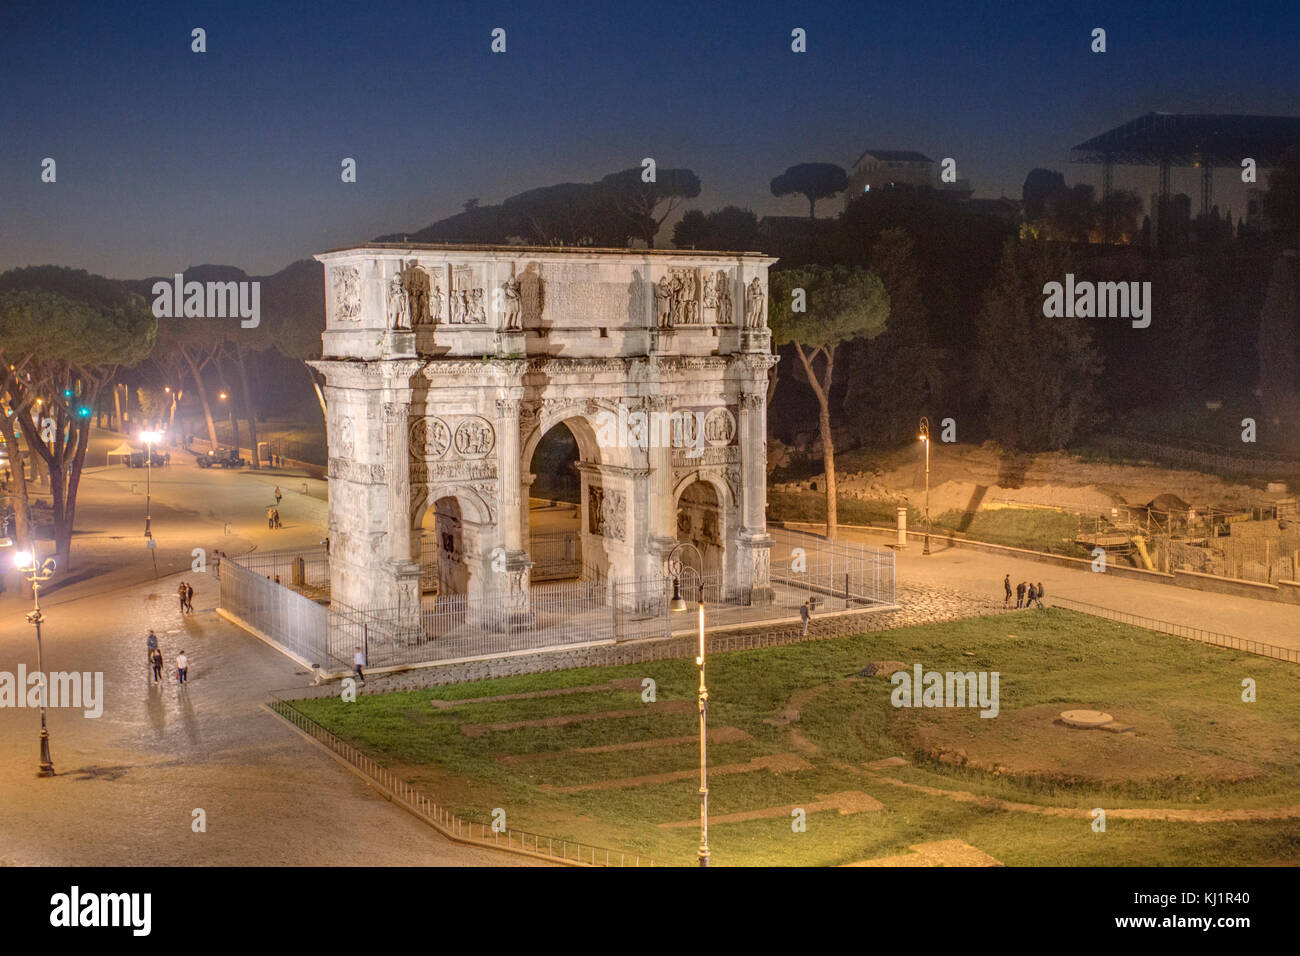 Arco di Costantino, roma - Arco di Costantino, Roma Foto Stock